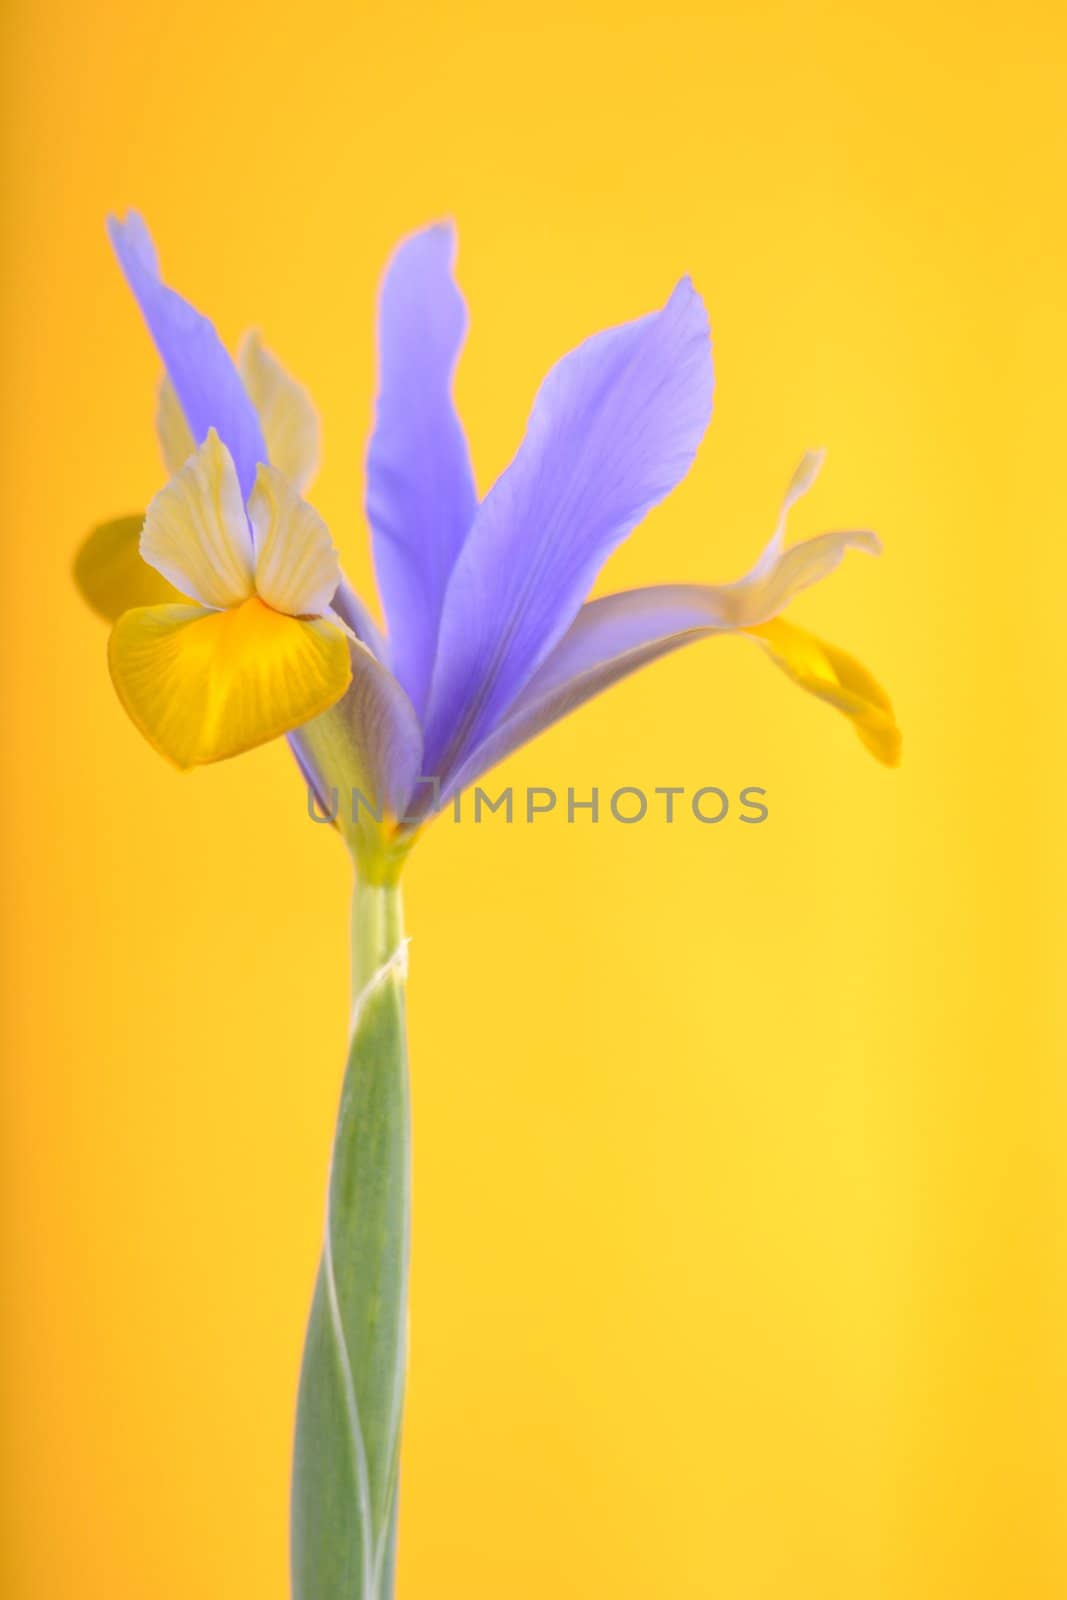 yellowish white single flower iris, on a yellow background